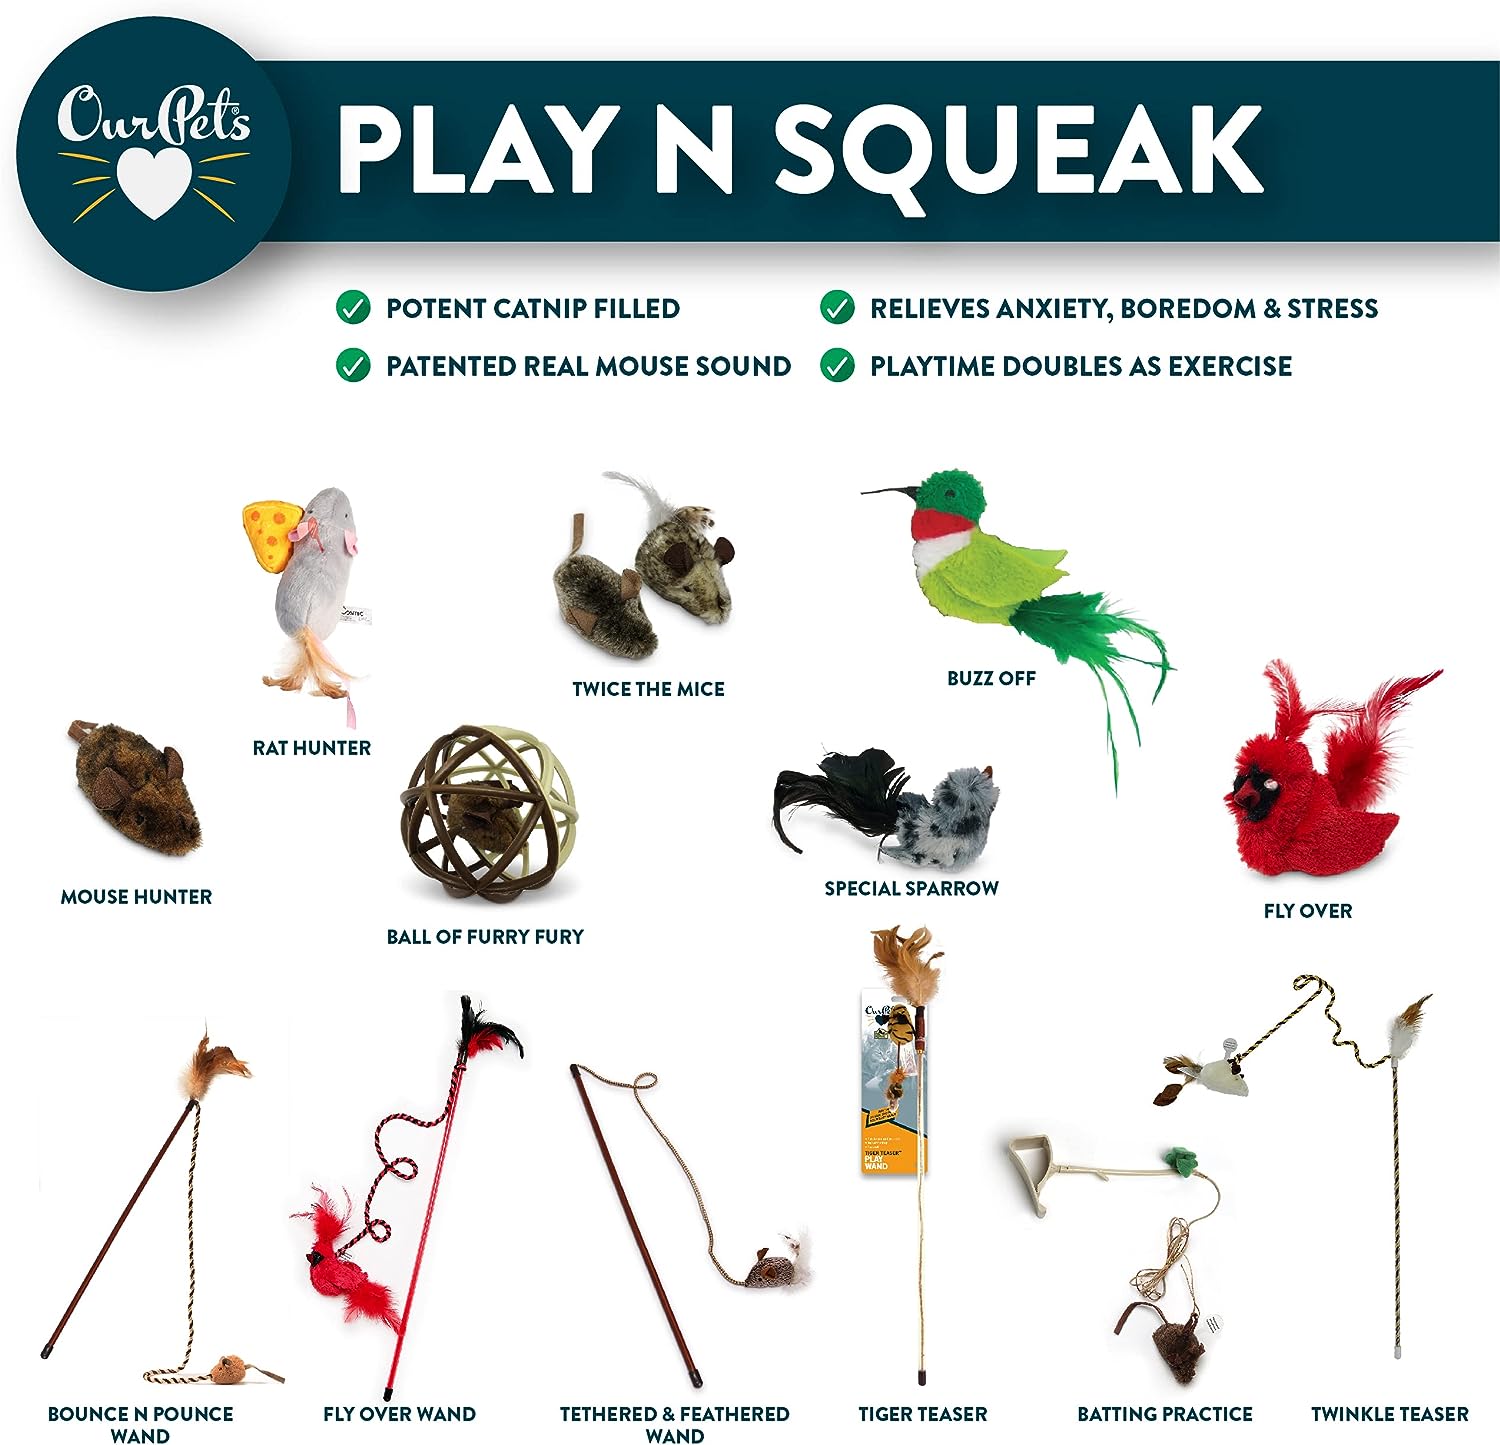 Play-N-Squeak Juguetes interactivos para gatos con hierba gatera (juguetes para